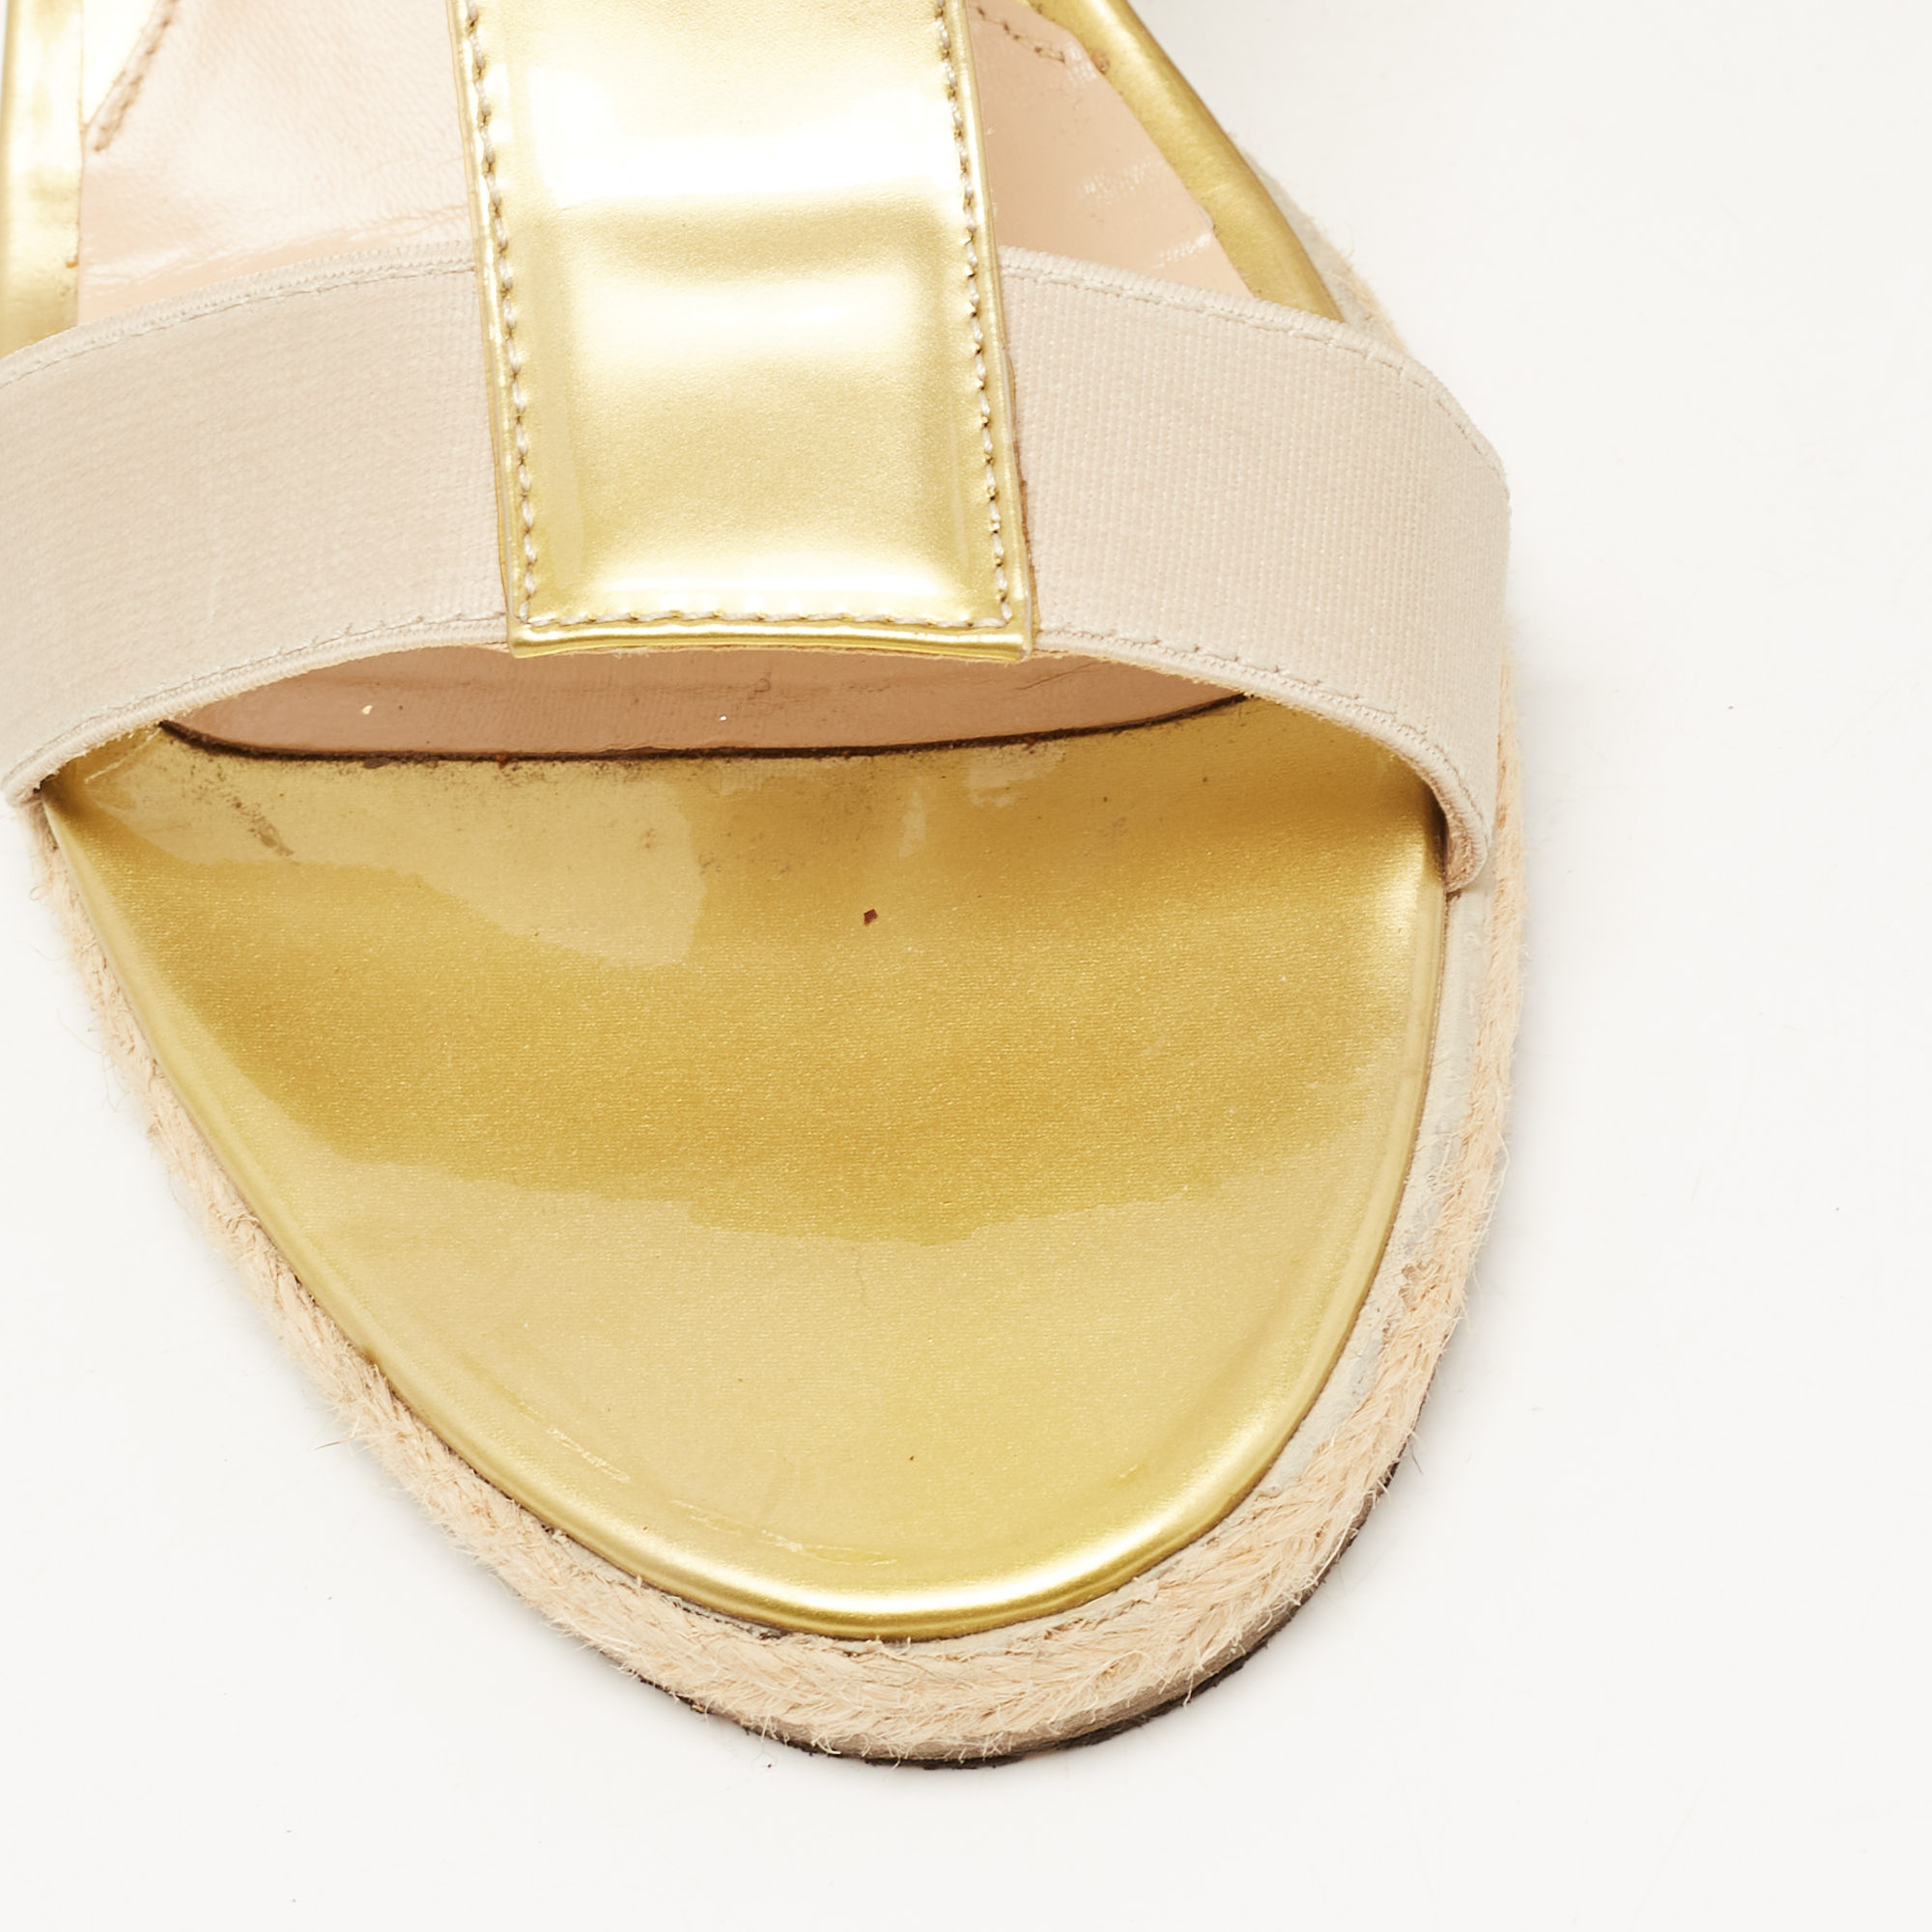 Salvatore Ferragamo Gold Patent Leather And Stretch Fabric Carioca Wedge Espadrille Sandals Size 42